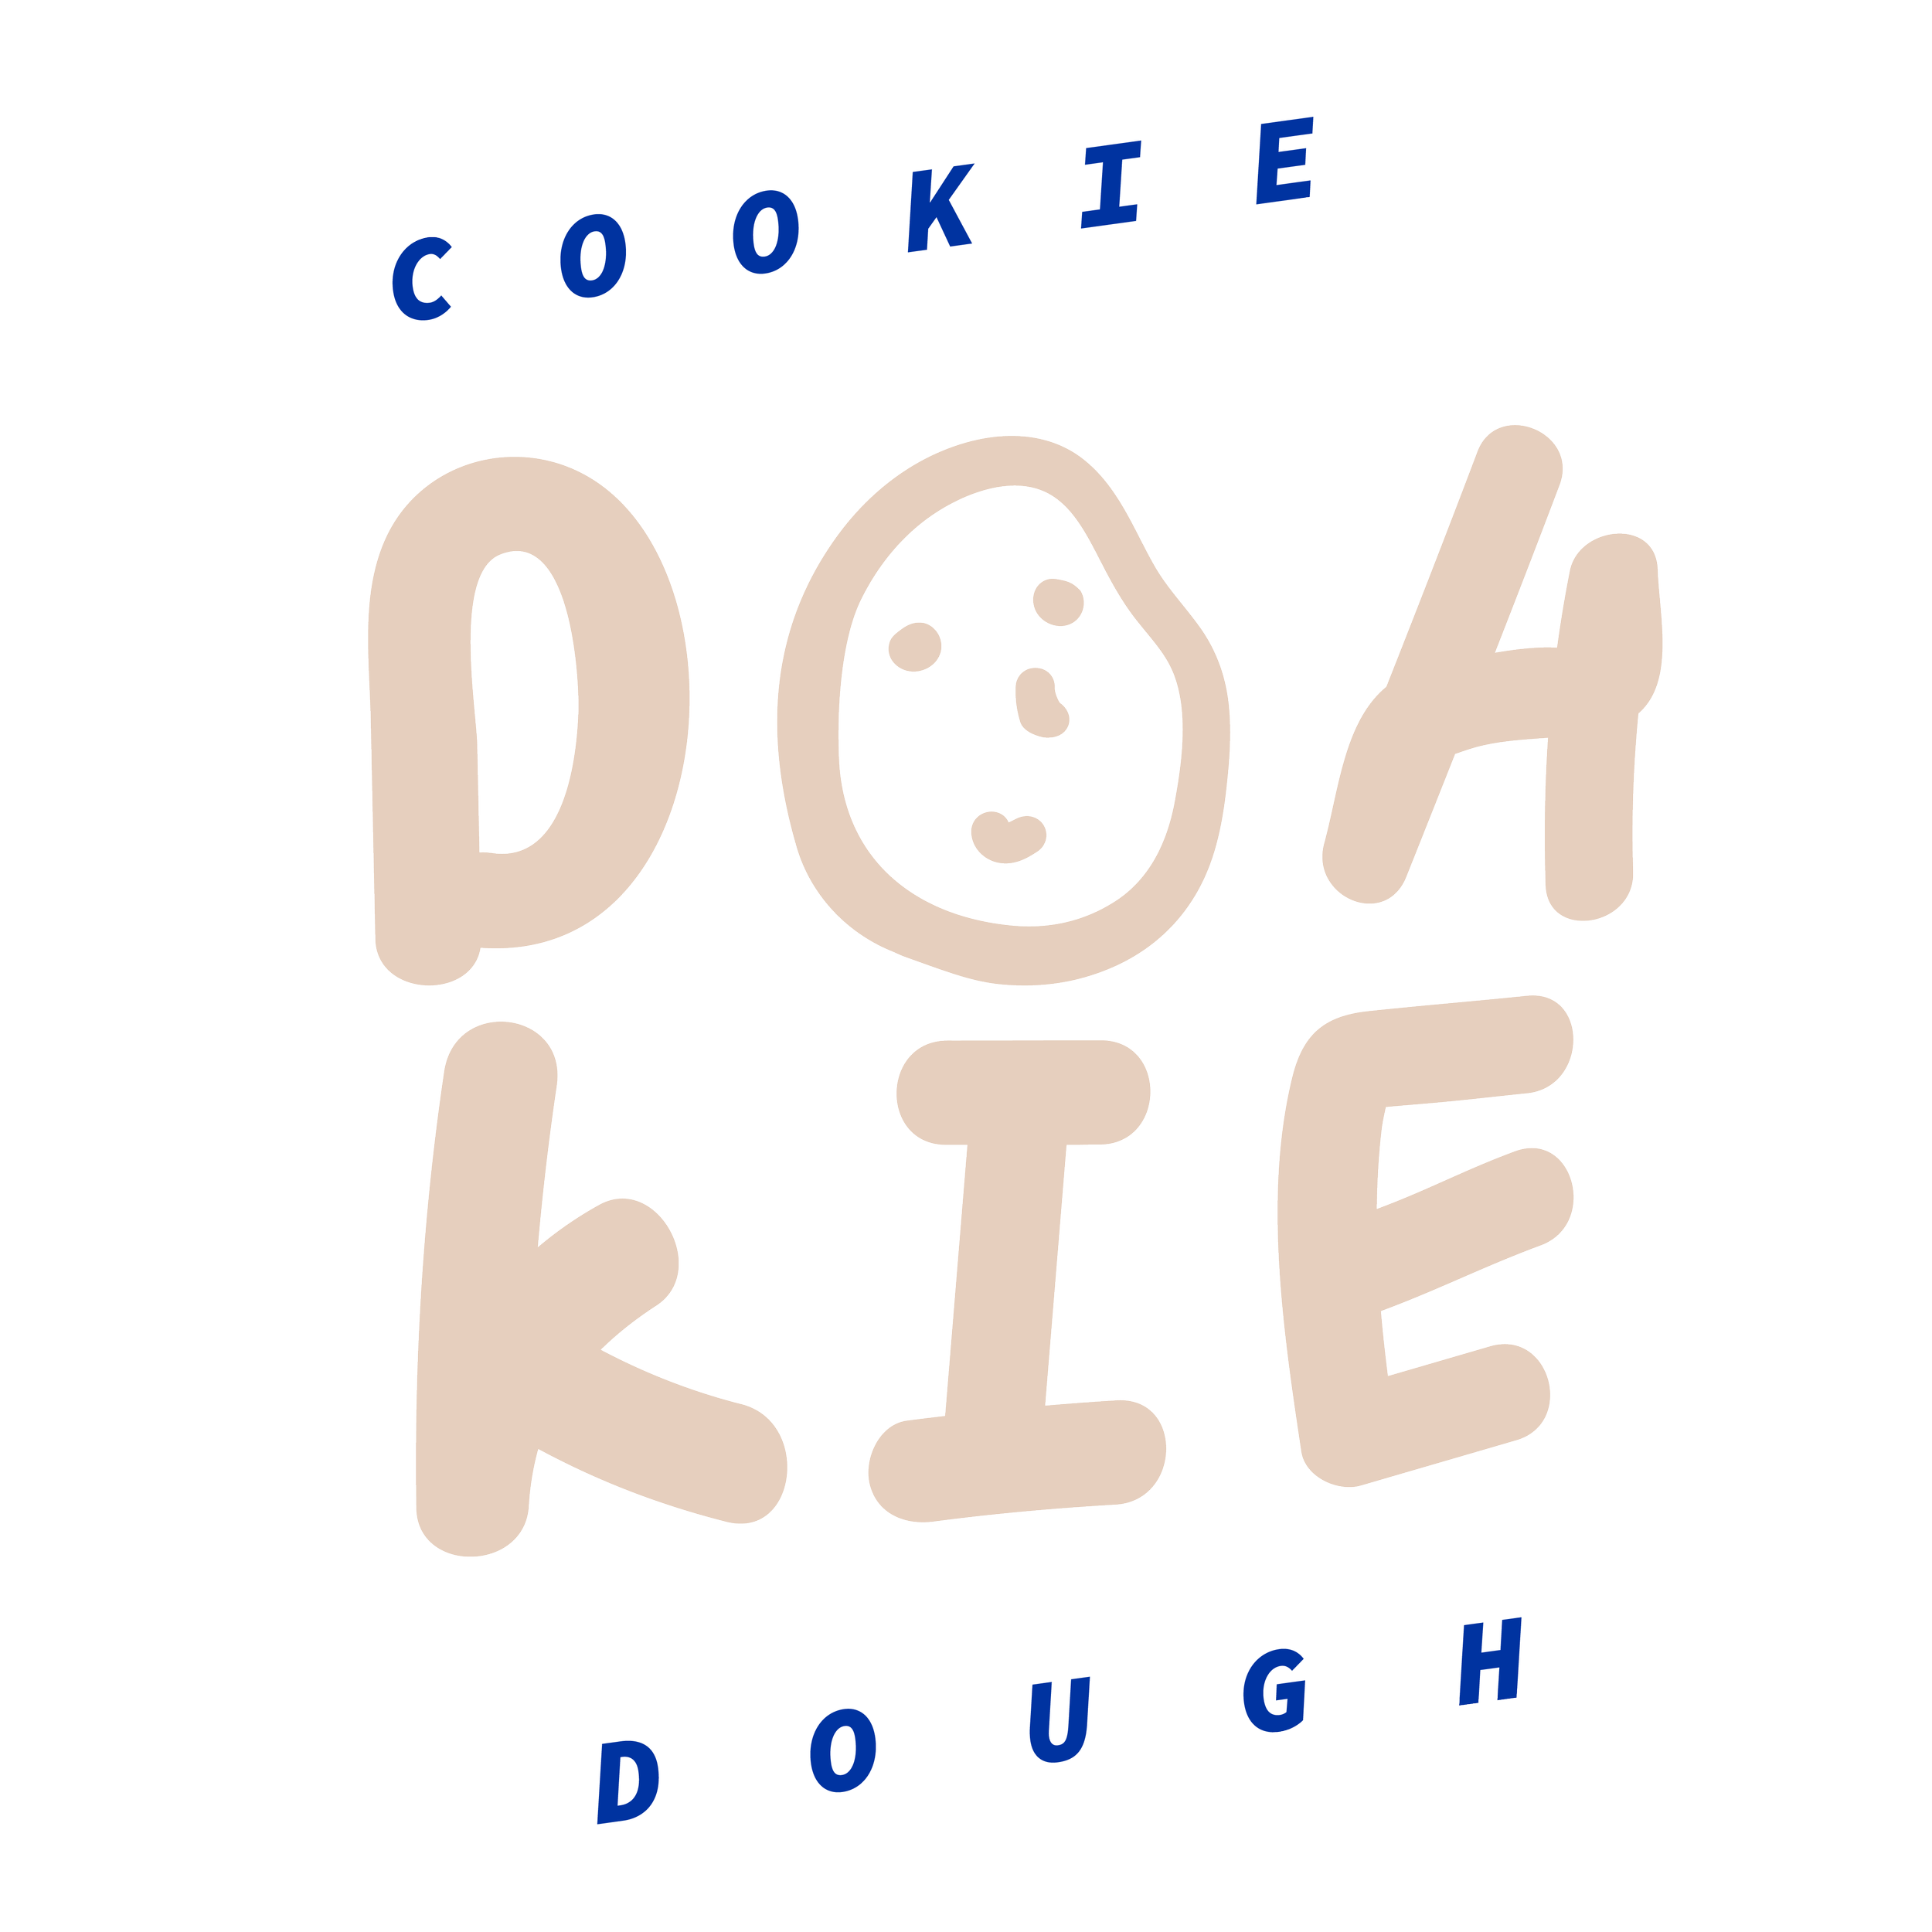 DOHKIE - The Edible Cookie Dough Shop